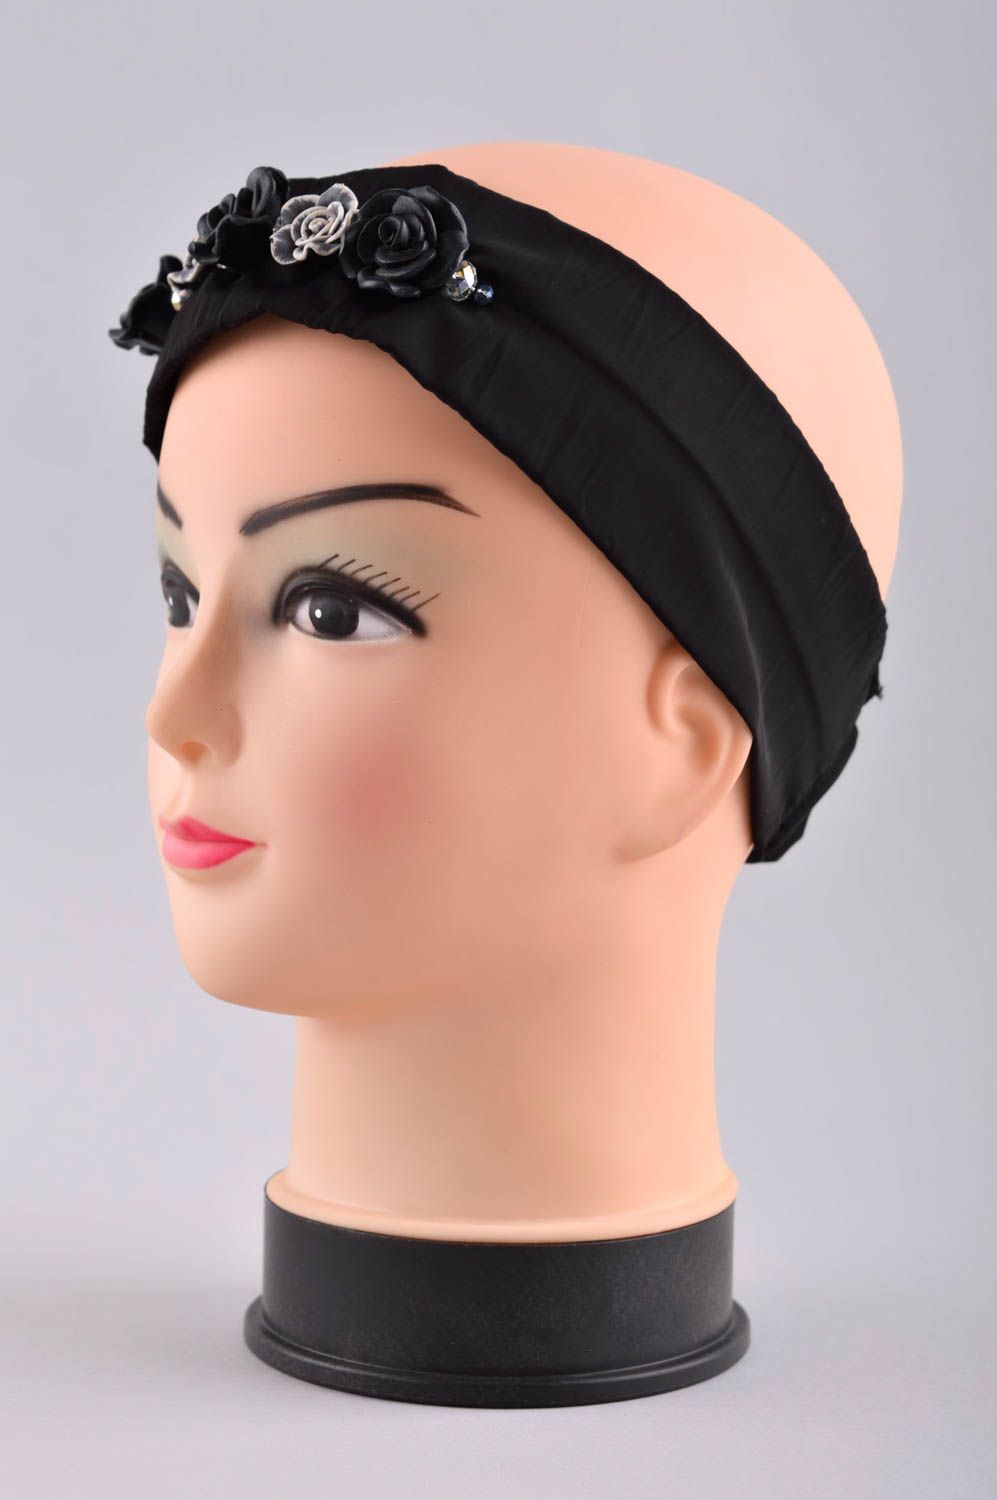 Handmade headband designer head accessory gift ideas headband for girls photo 2